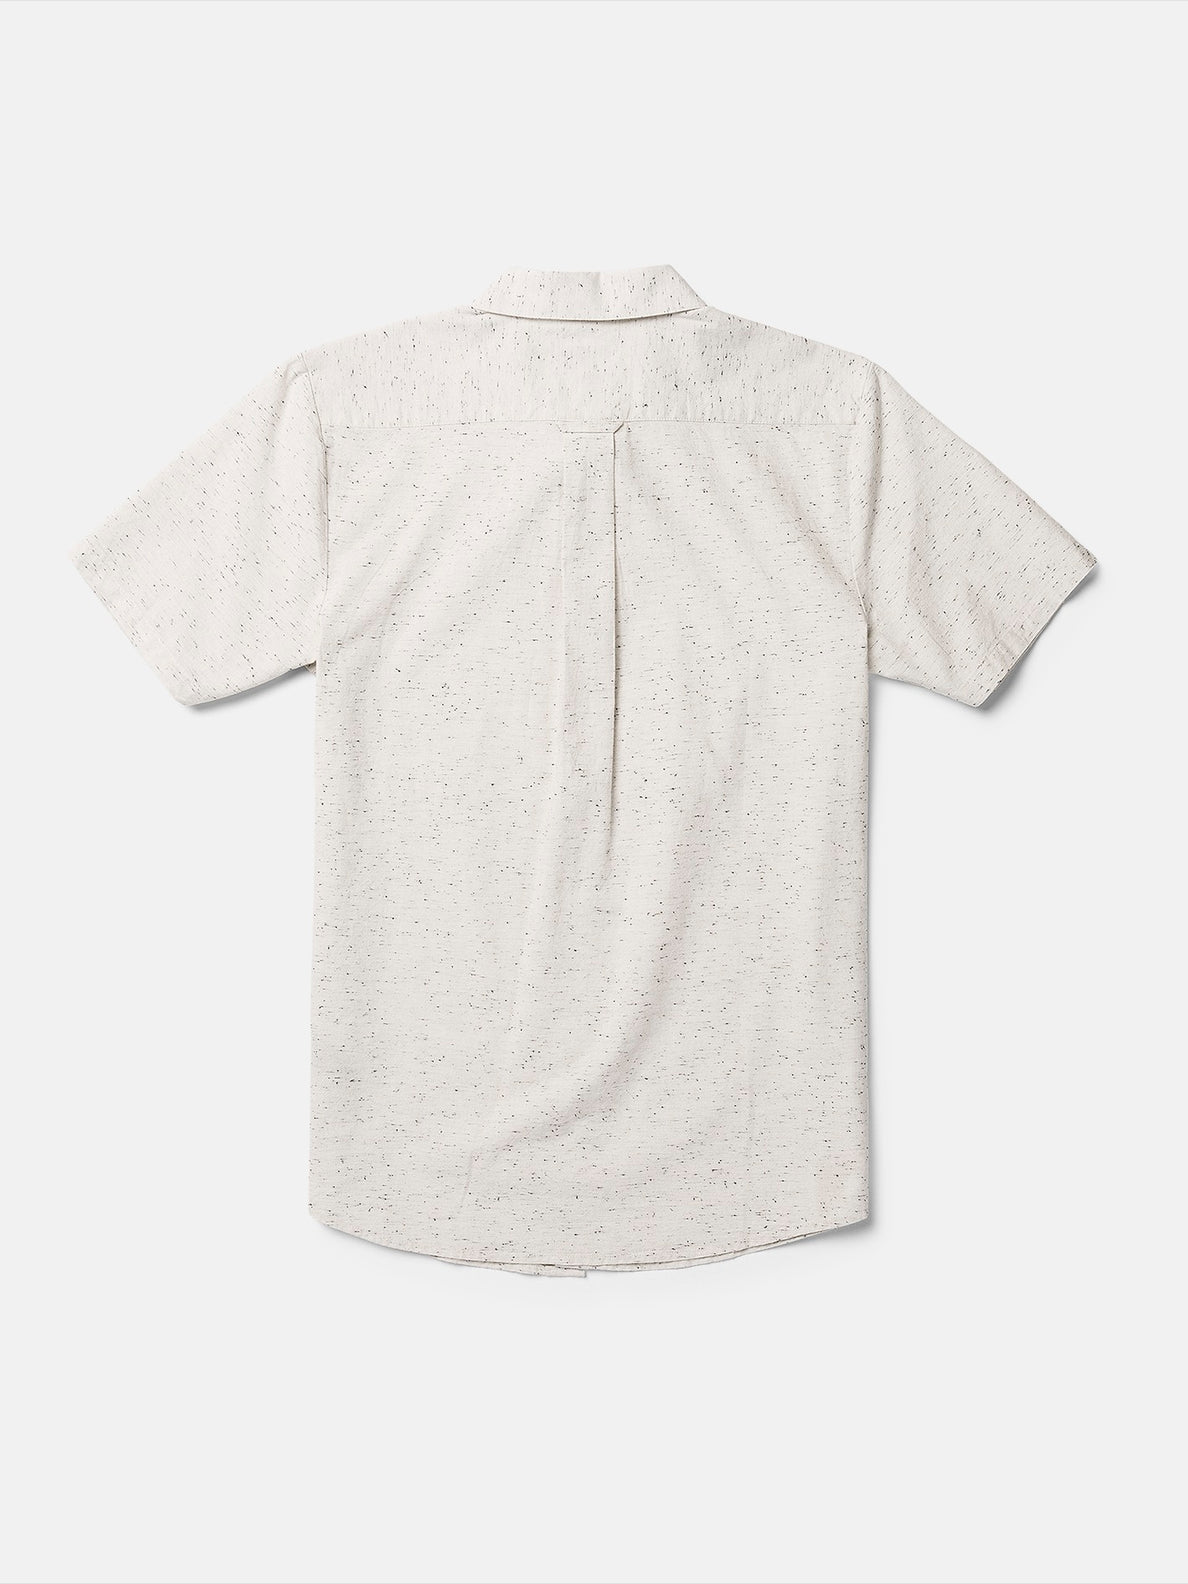 Date Knight Short Sleeve Shirt - Off White